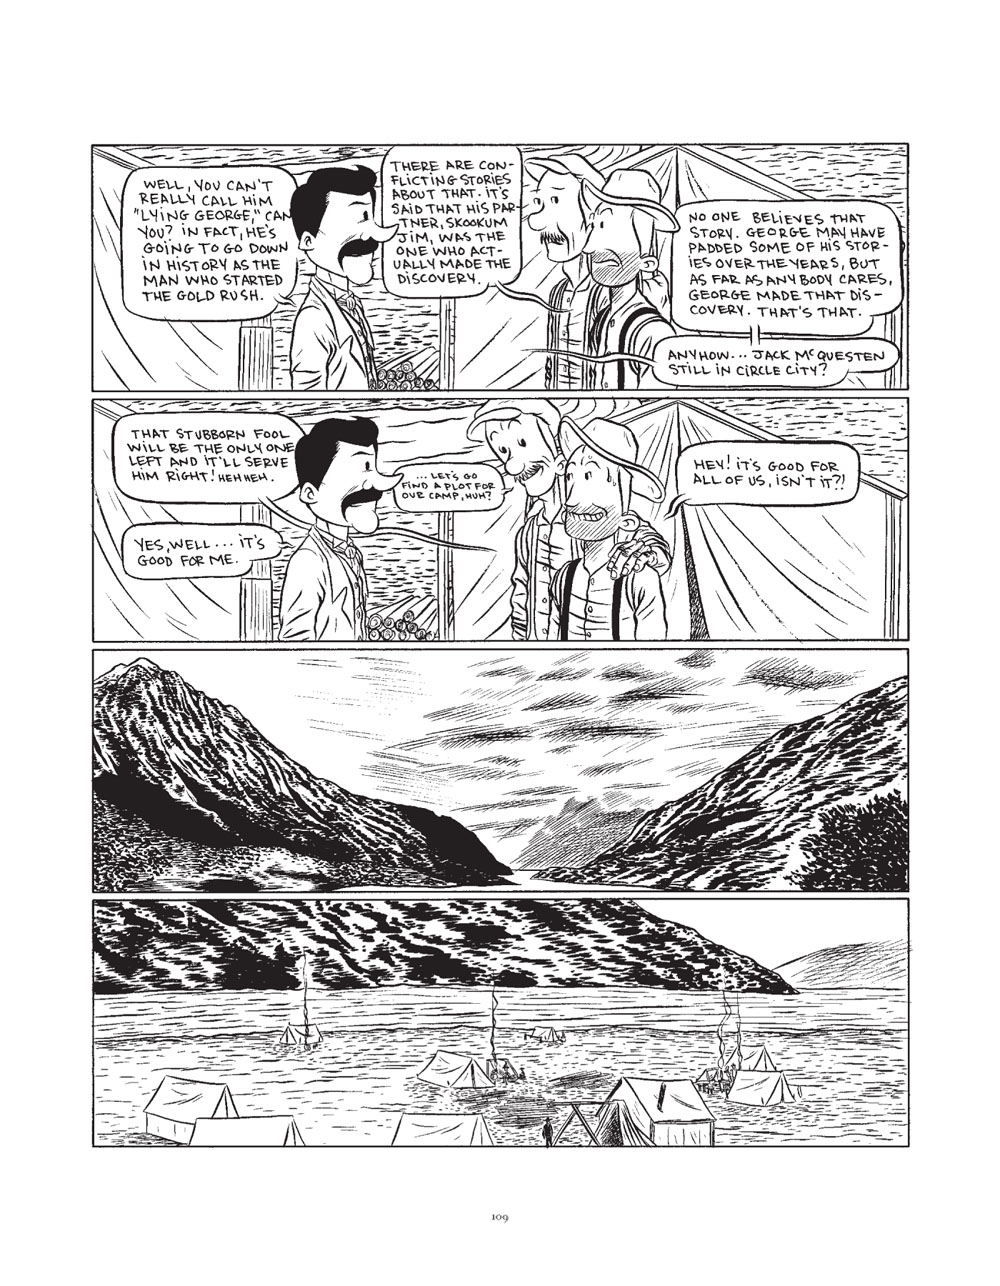 The Klondike Page 109